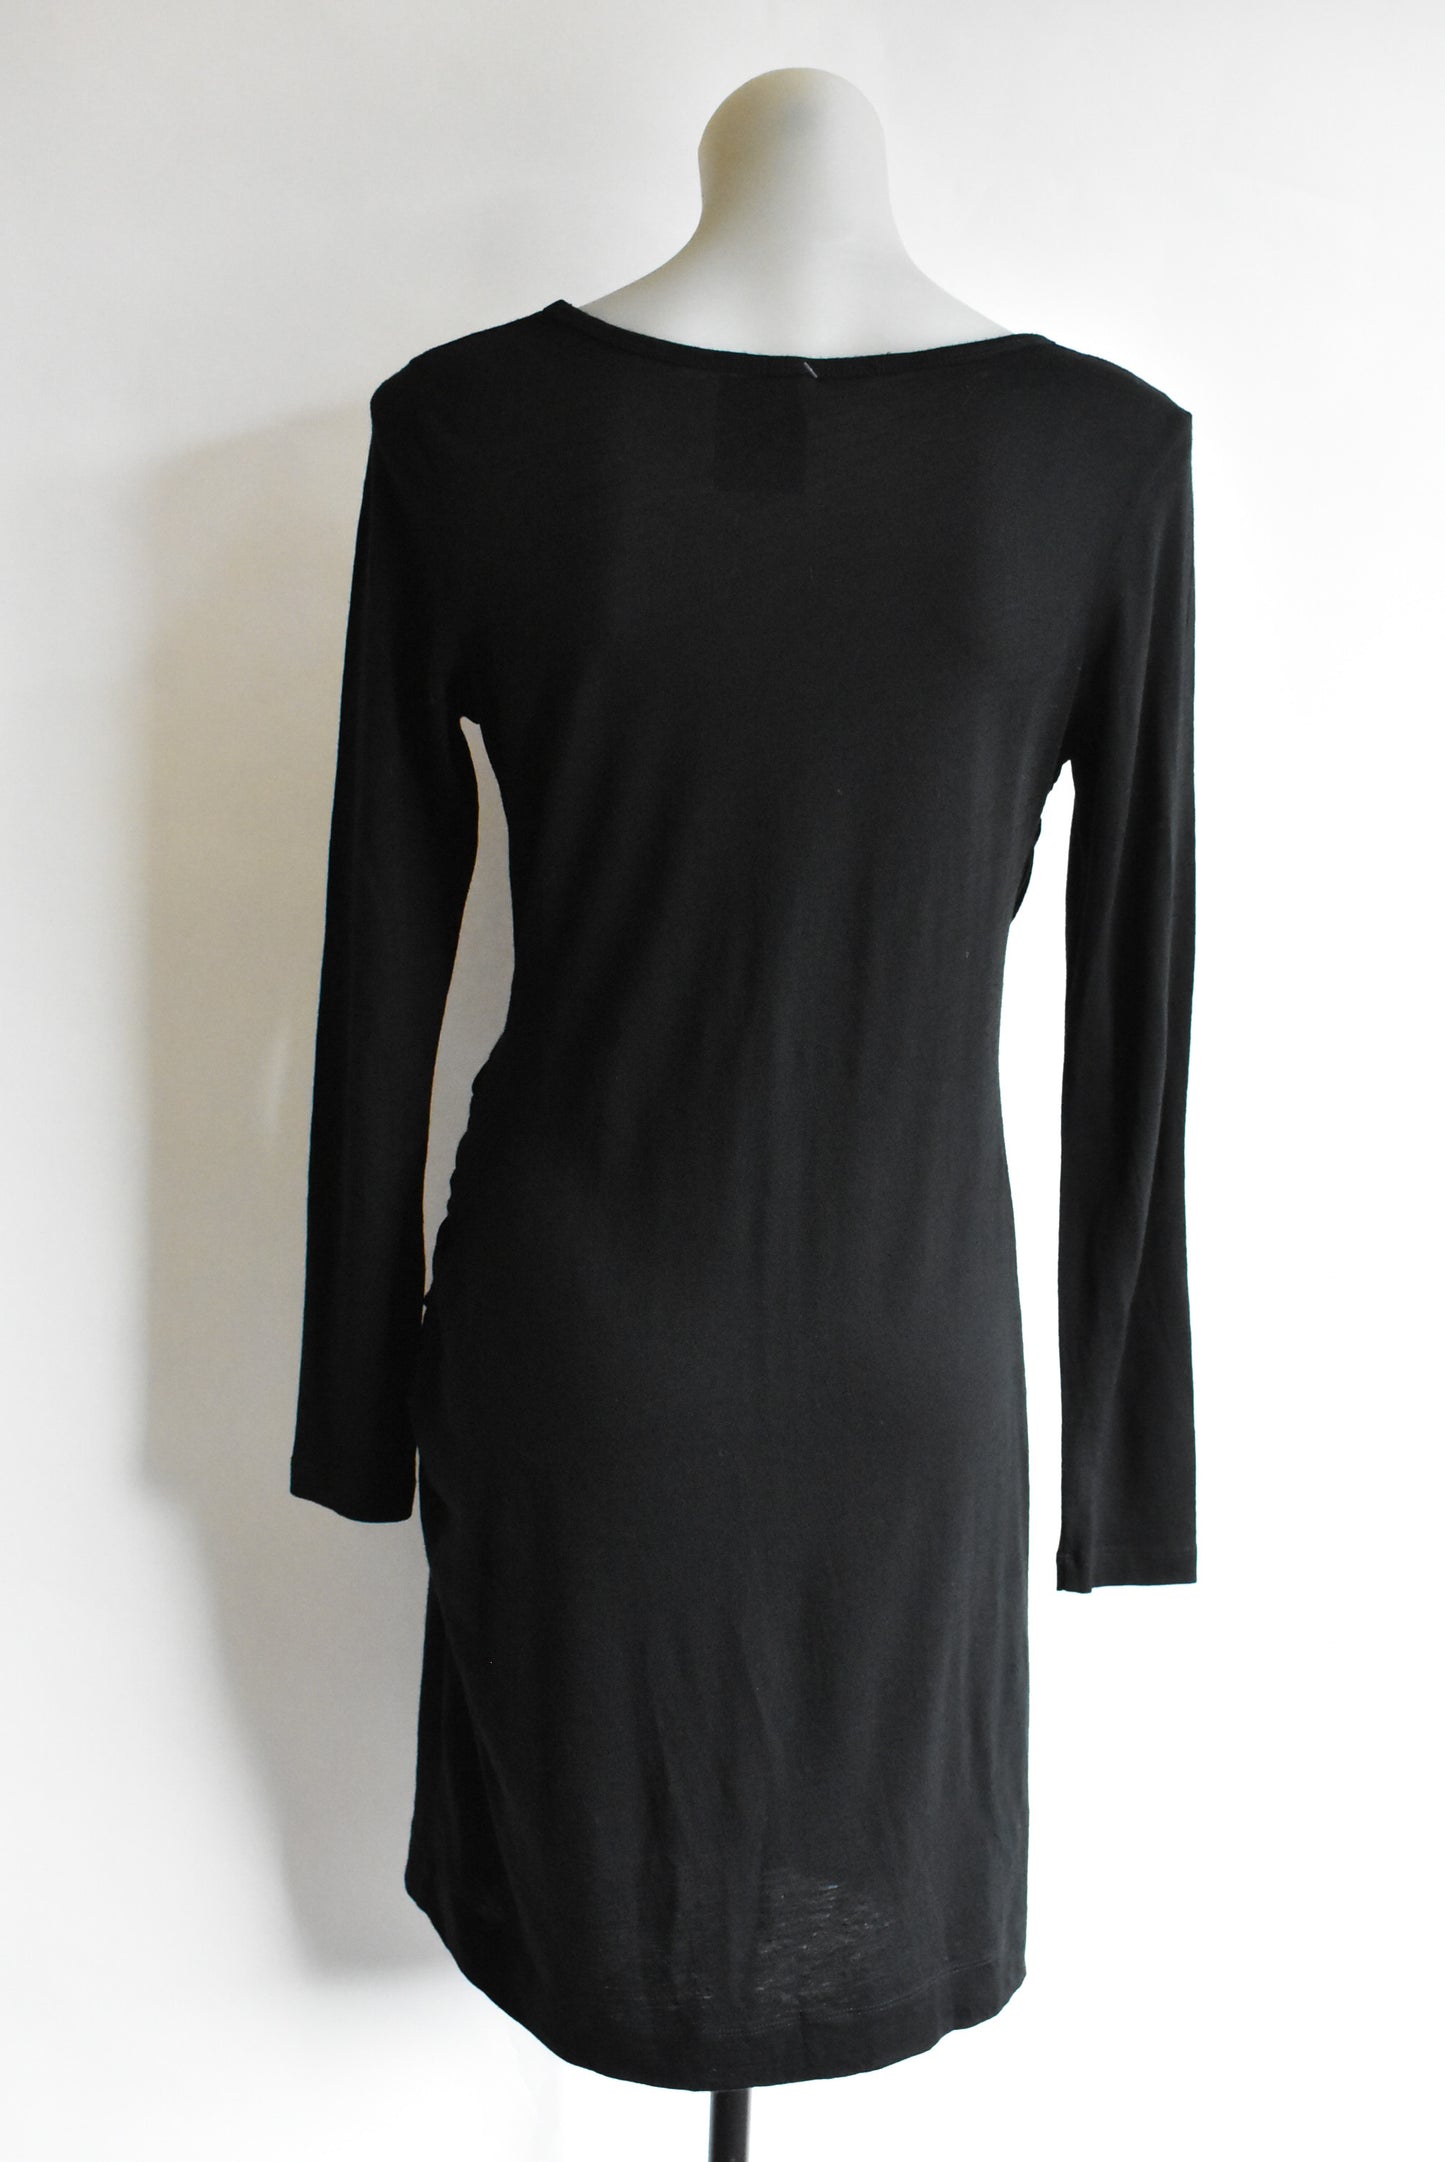 Deborah Sweeney 100% wool sash front dress, size s